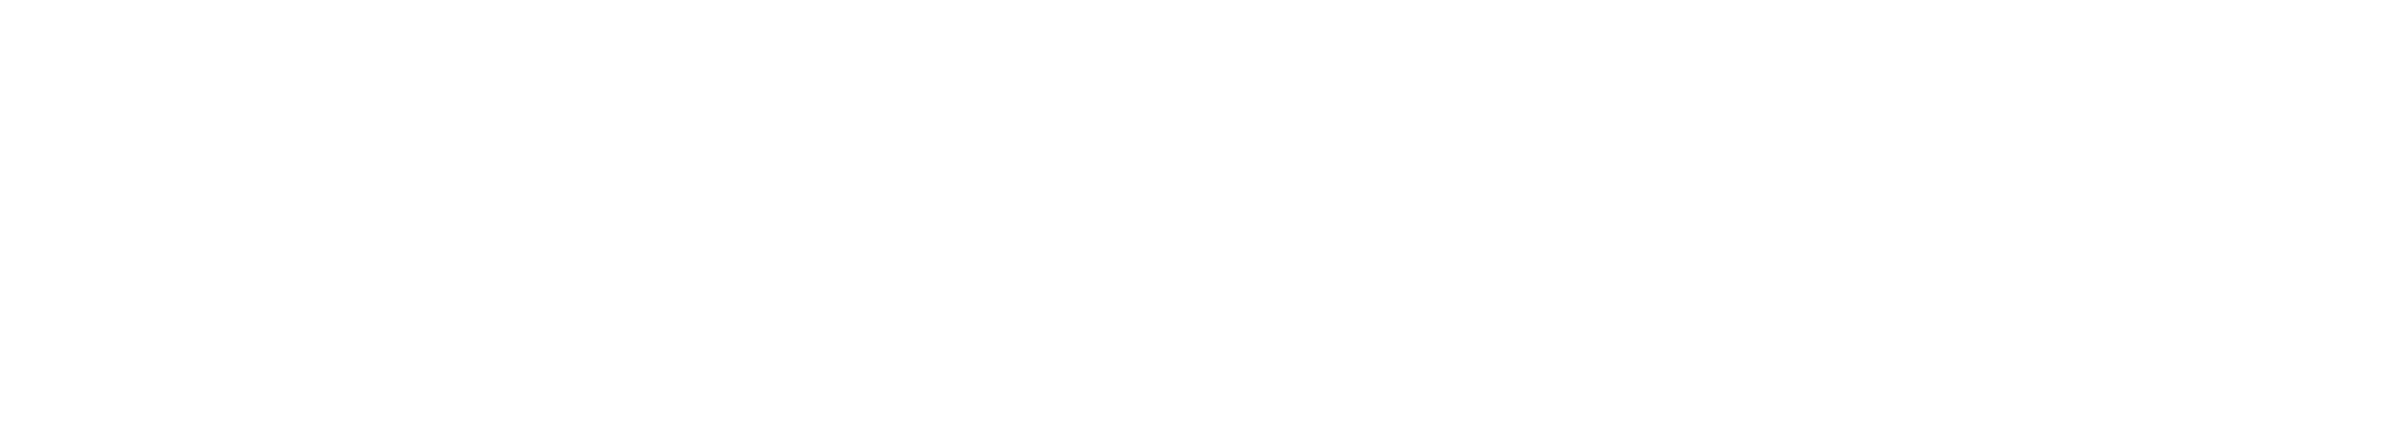 Talent Insight Group logo